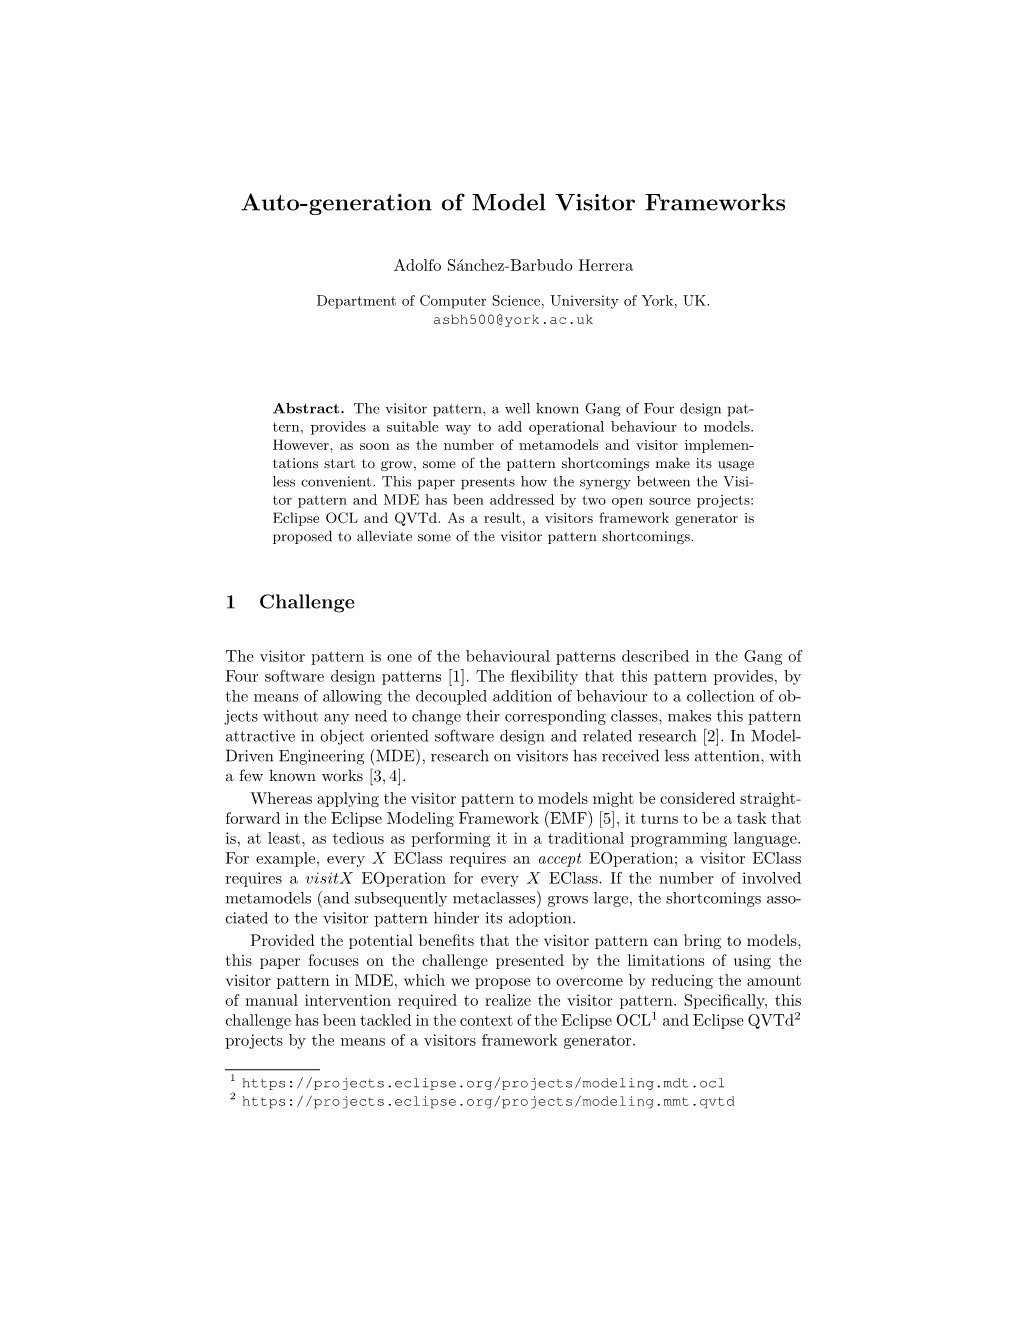 Auto-Generation of Model Visitor Frameworks